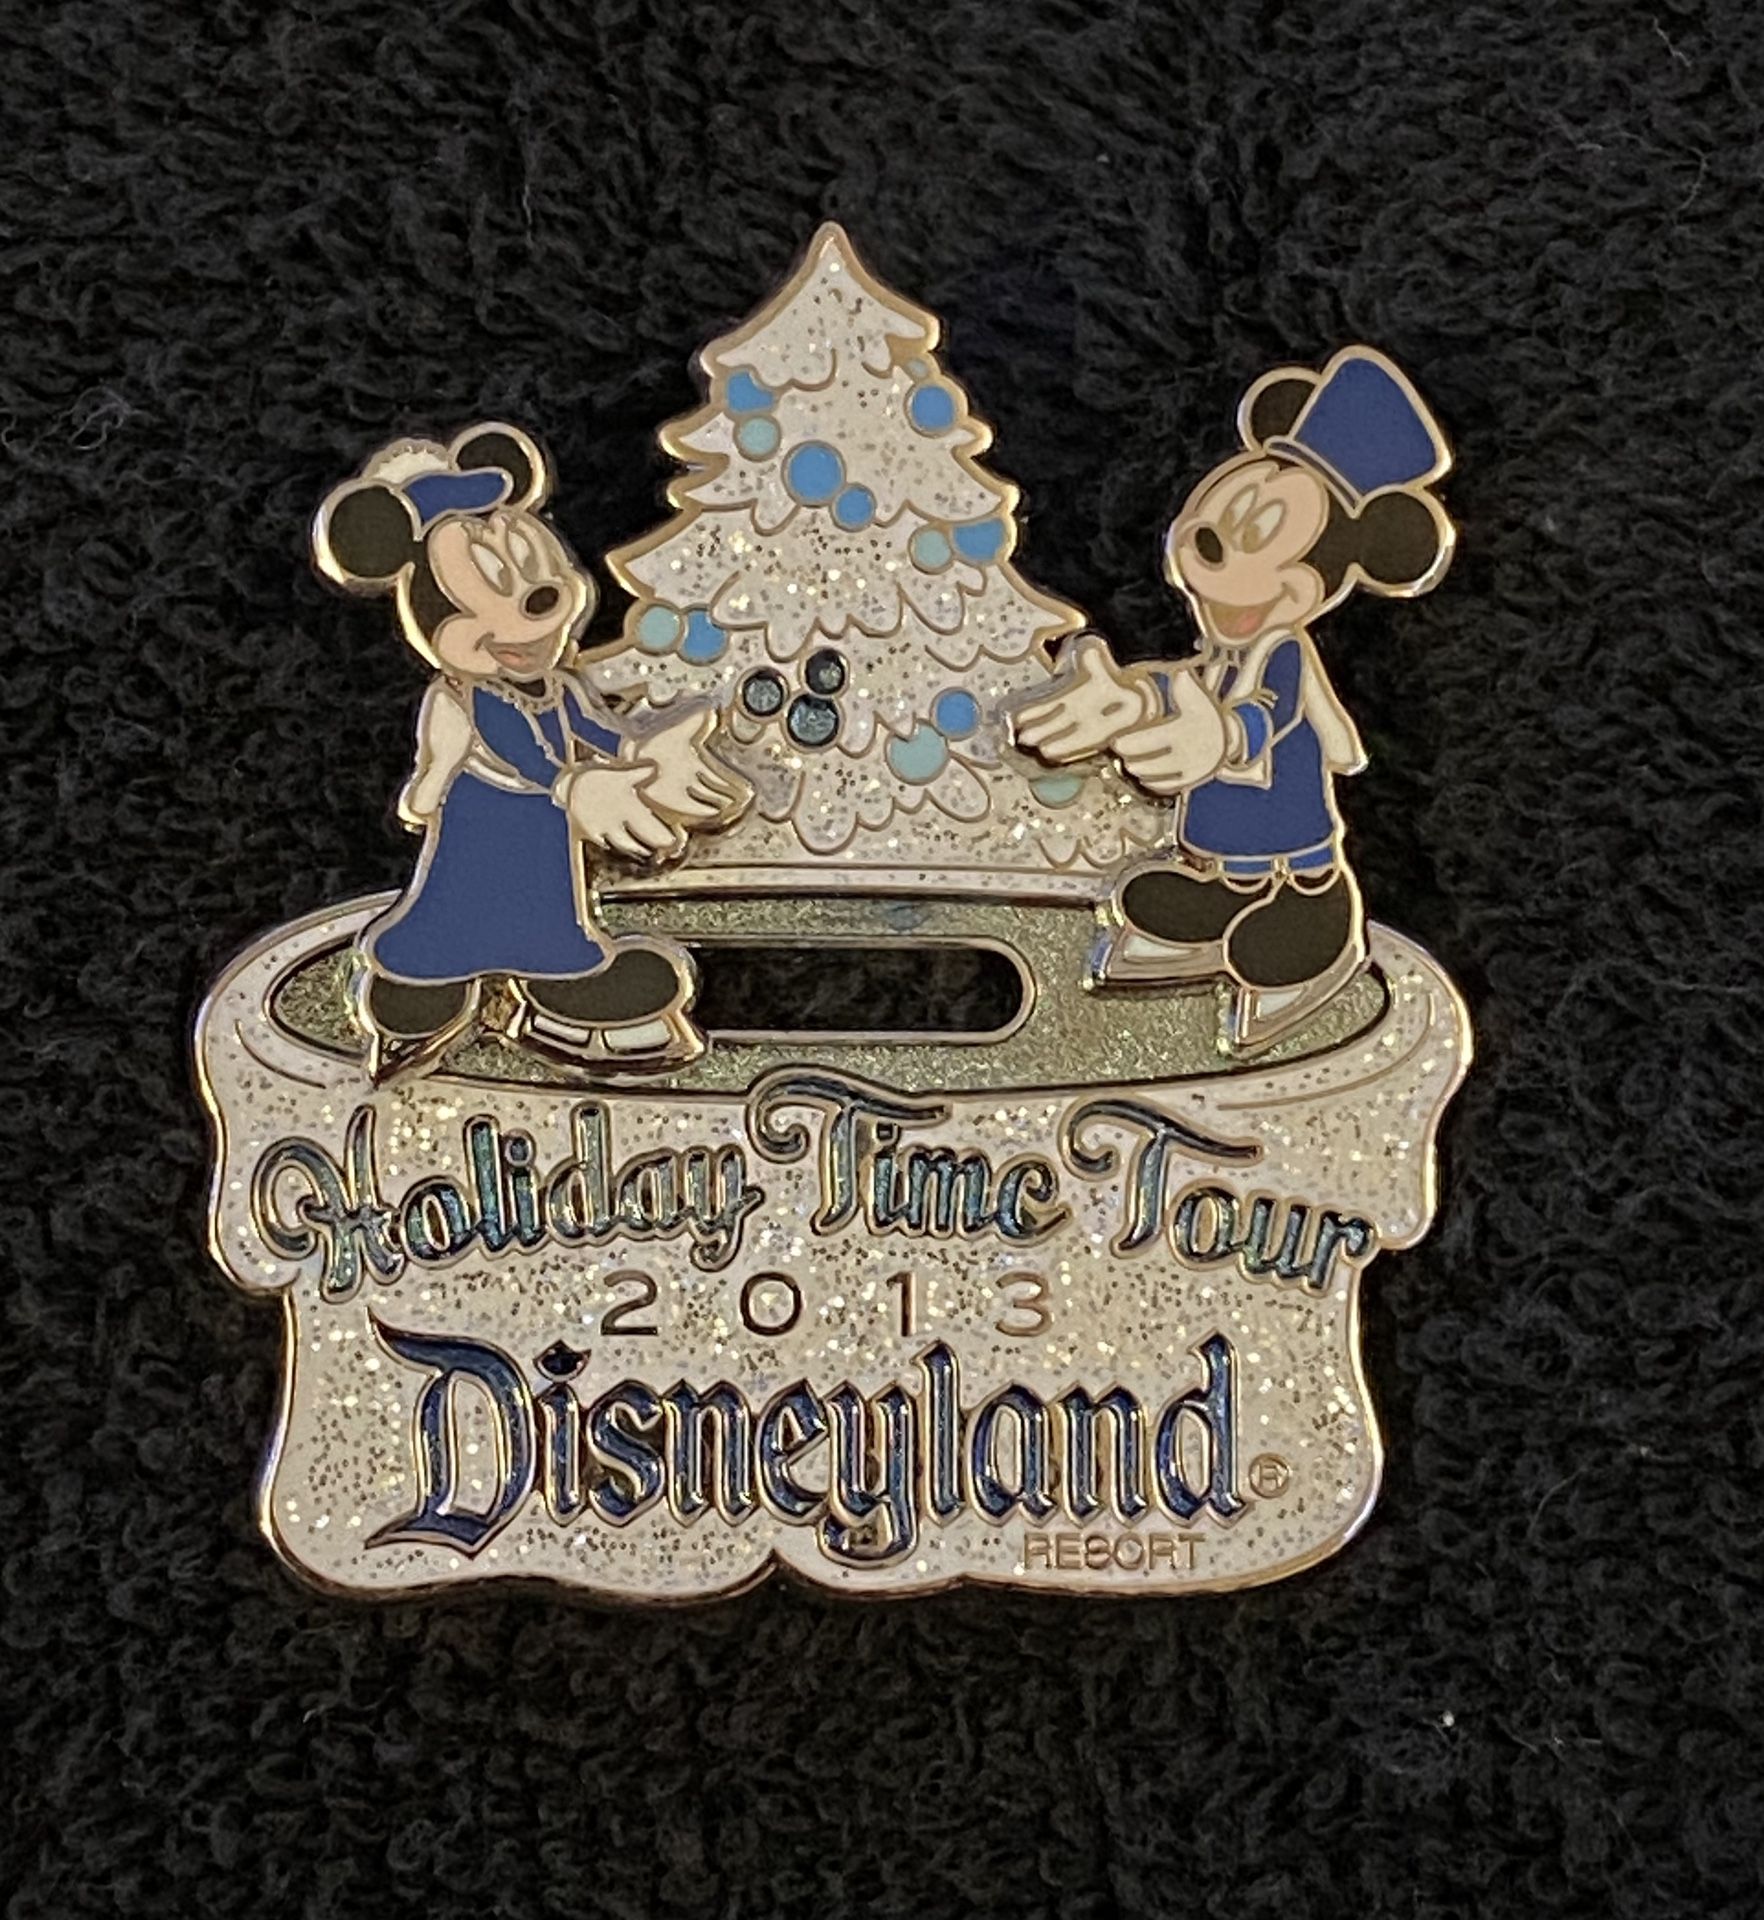 Disney Pin #187, 2013, Holiday Time at the Disneyland Resort